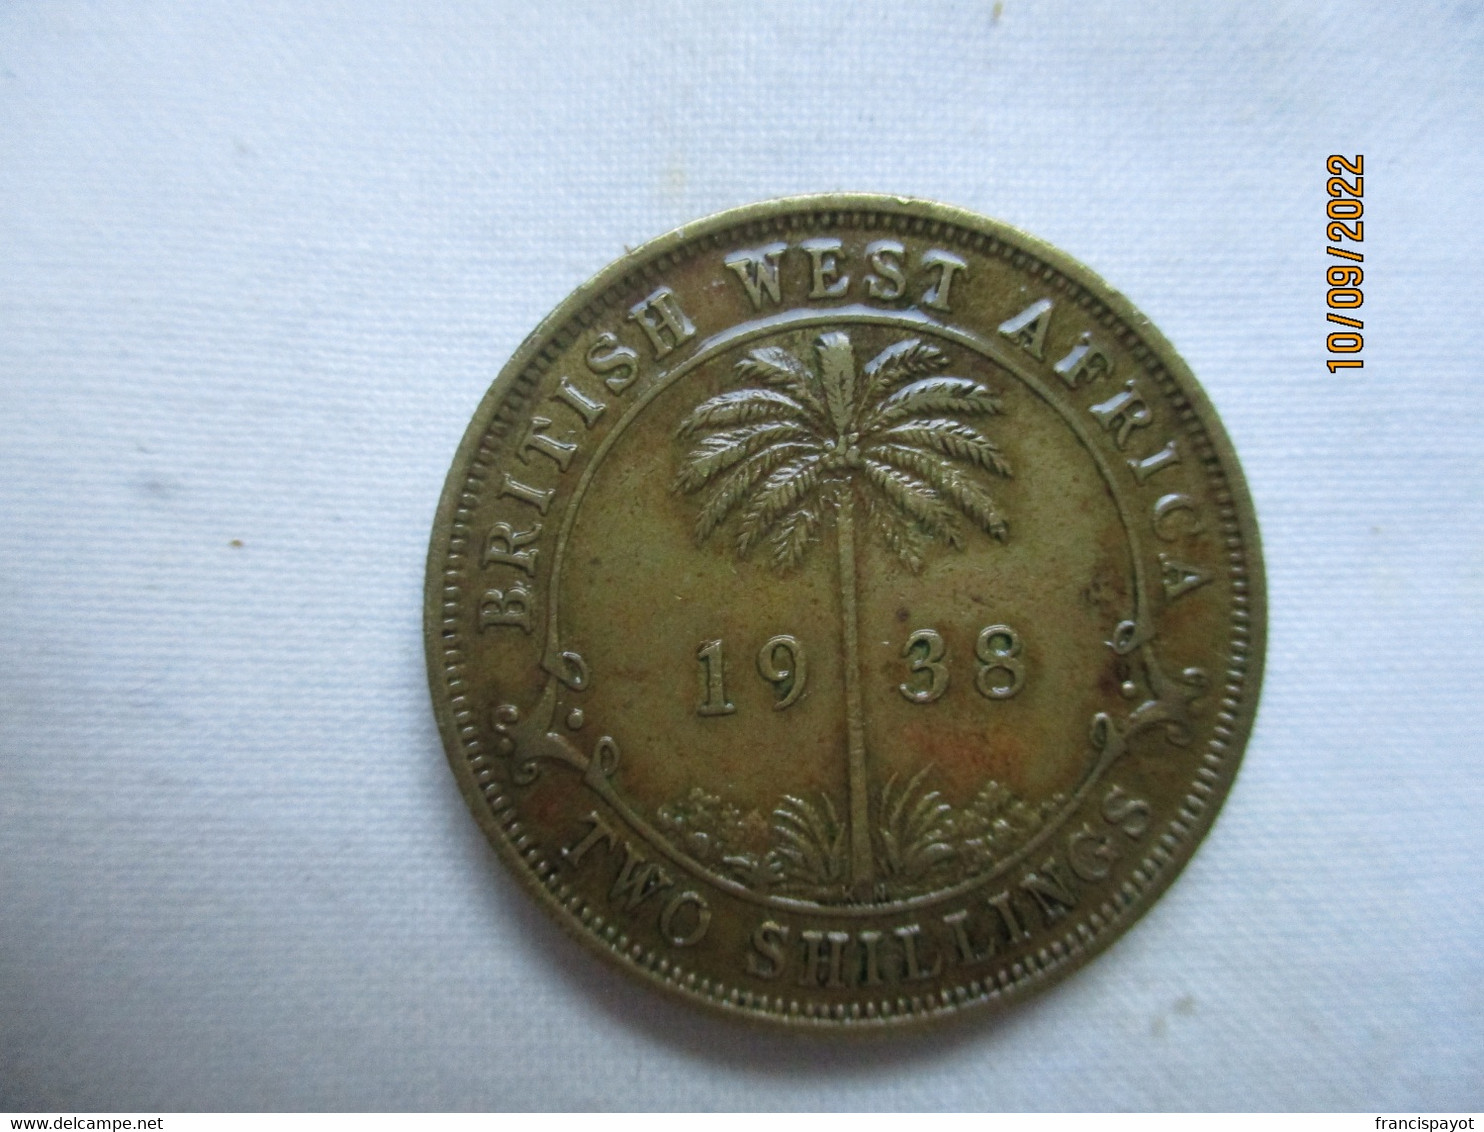 Nigeria / British West Africa: 2 Shillings 1938 - Nigeria